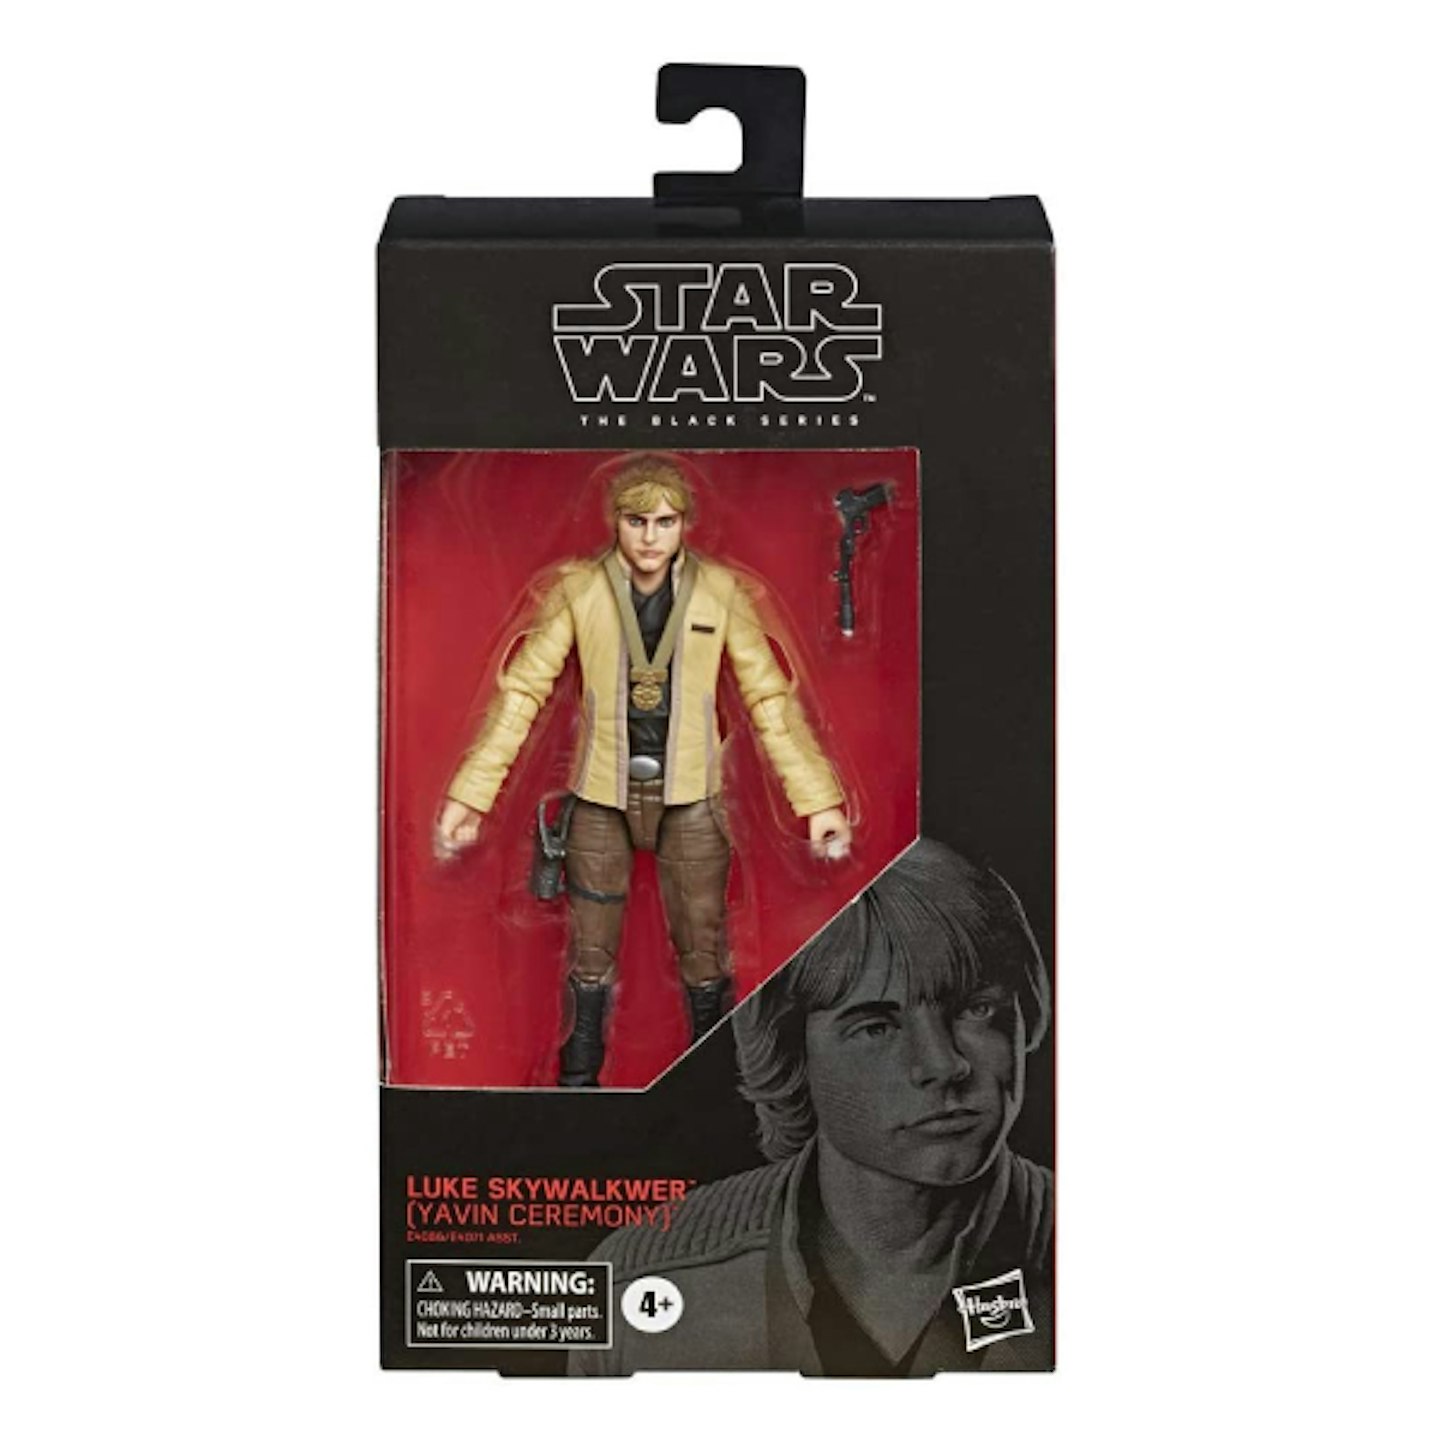 Luke Skywalker vintage collecible figure